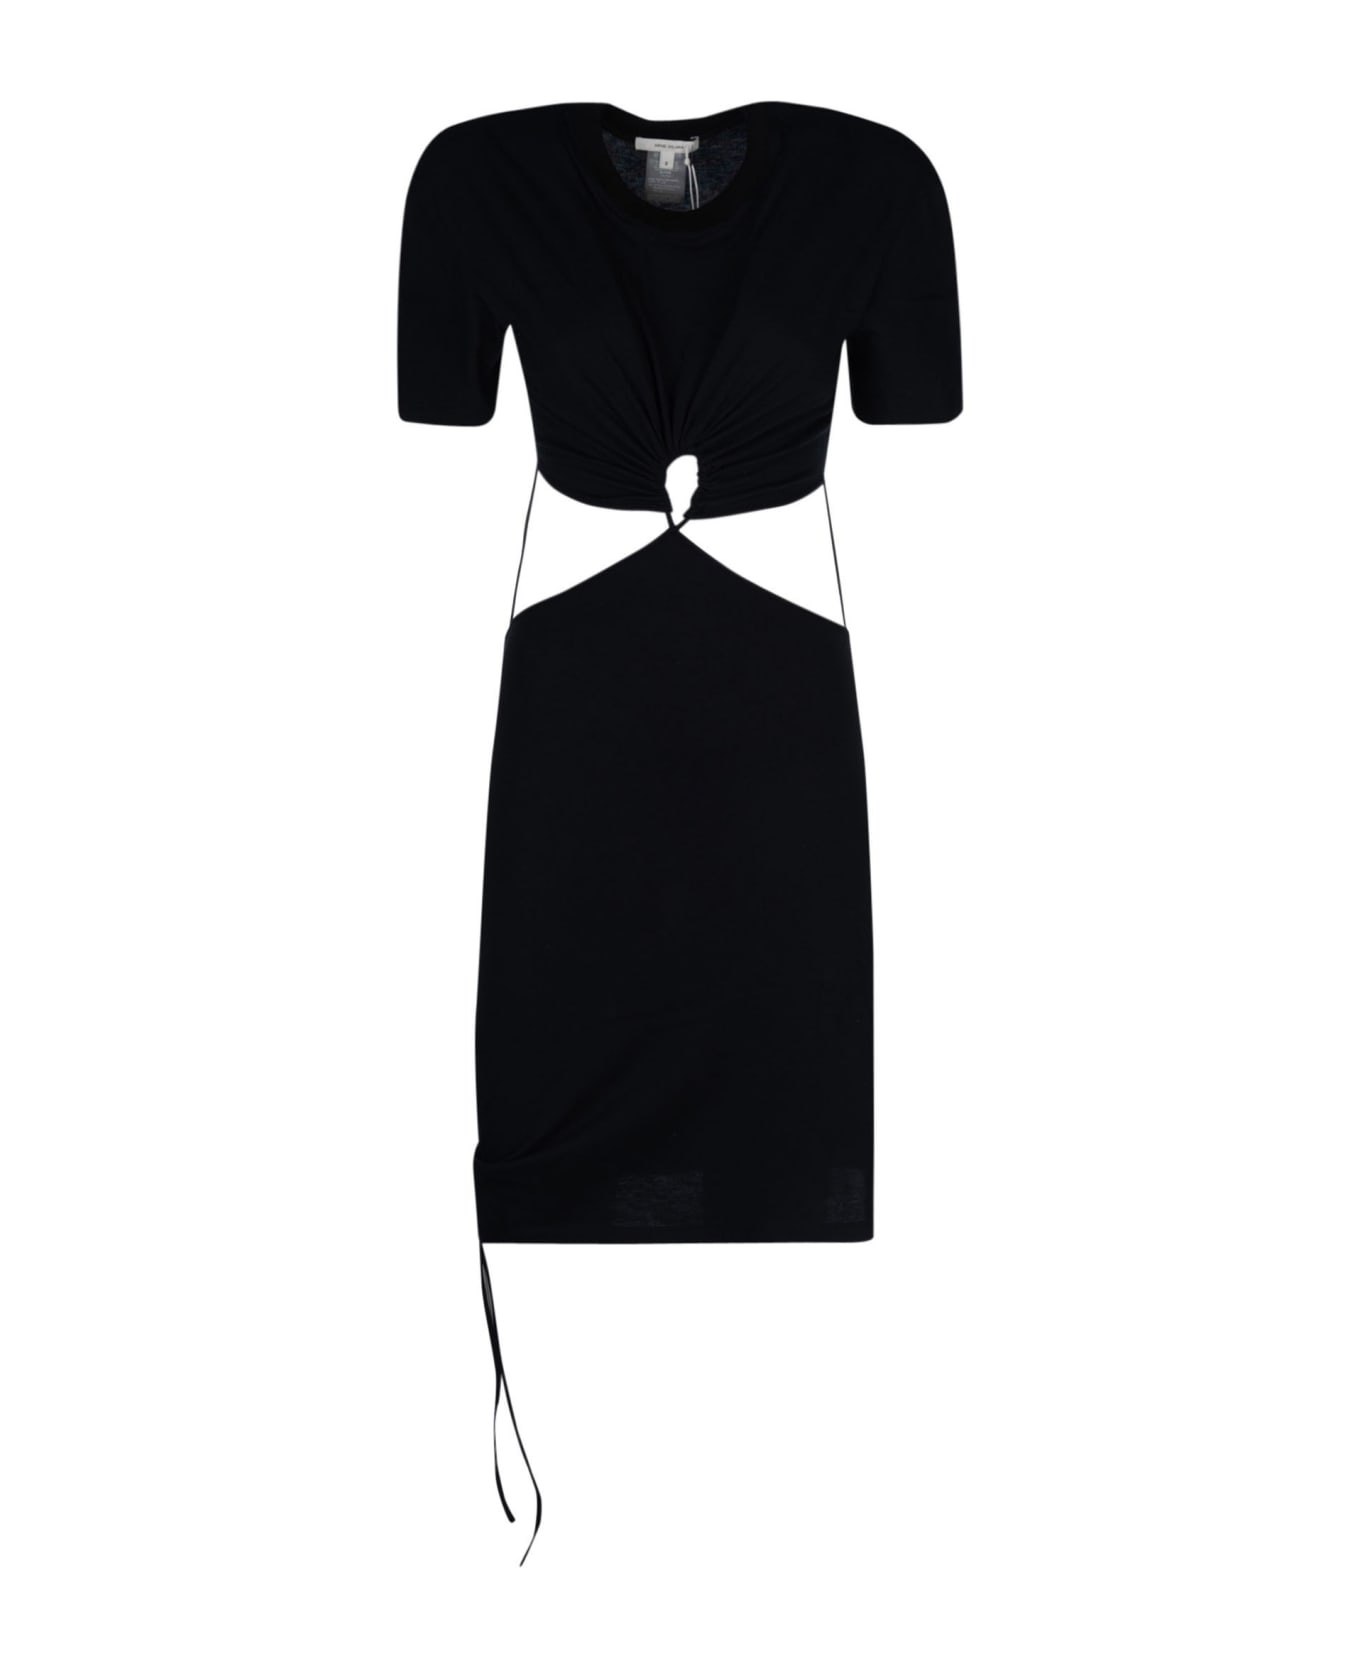 Nensi Dojaka T-shirt Dress - Black